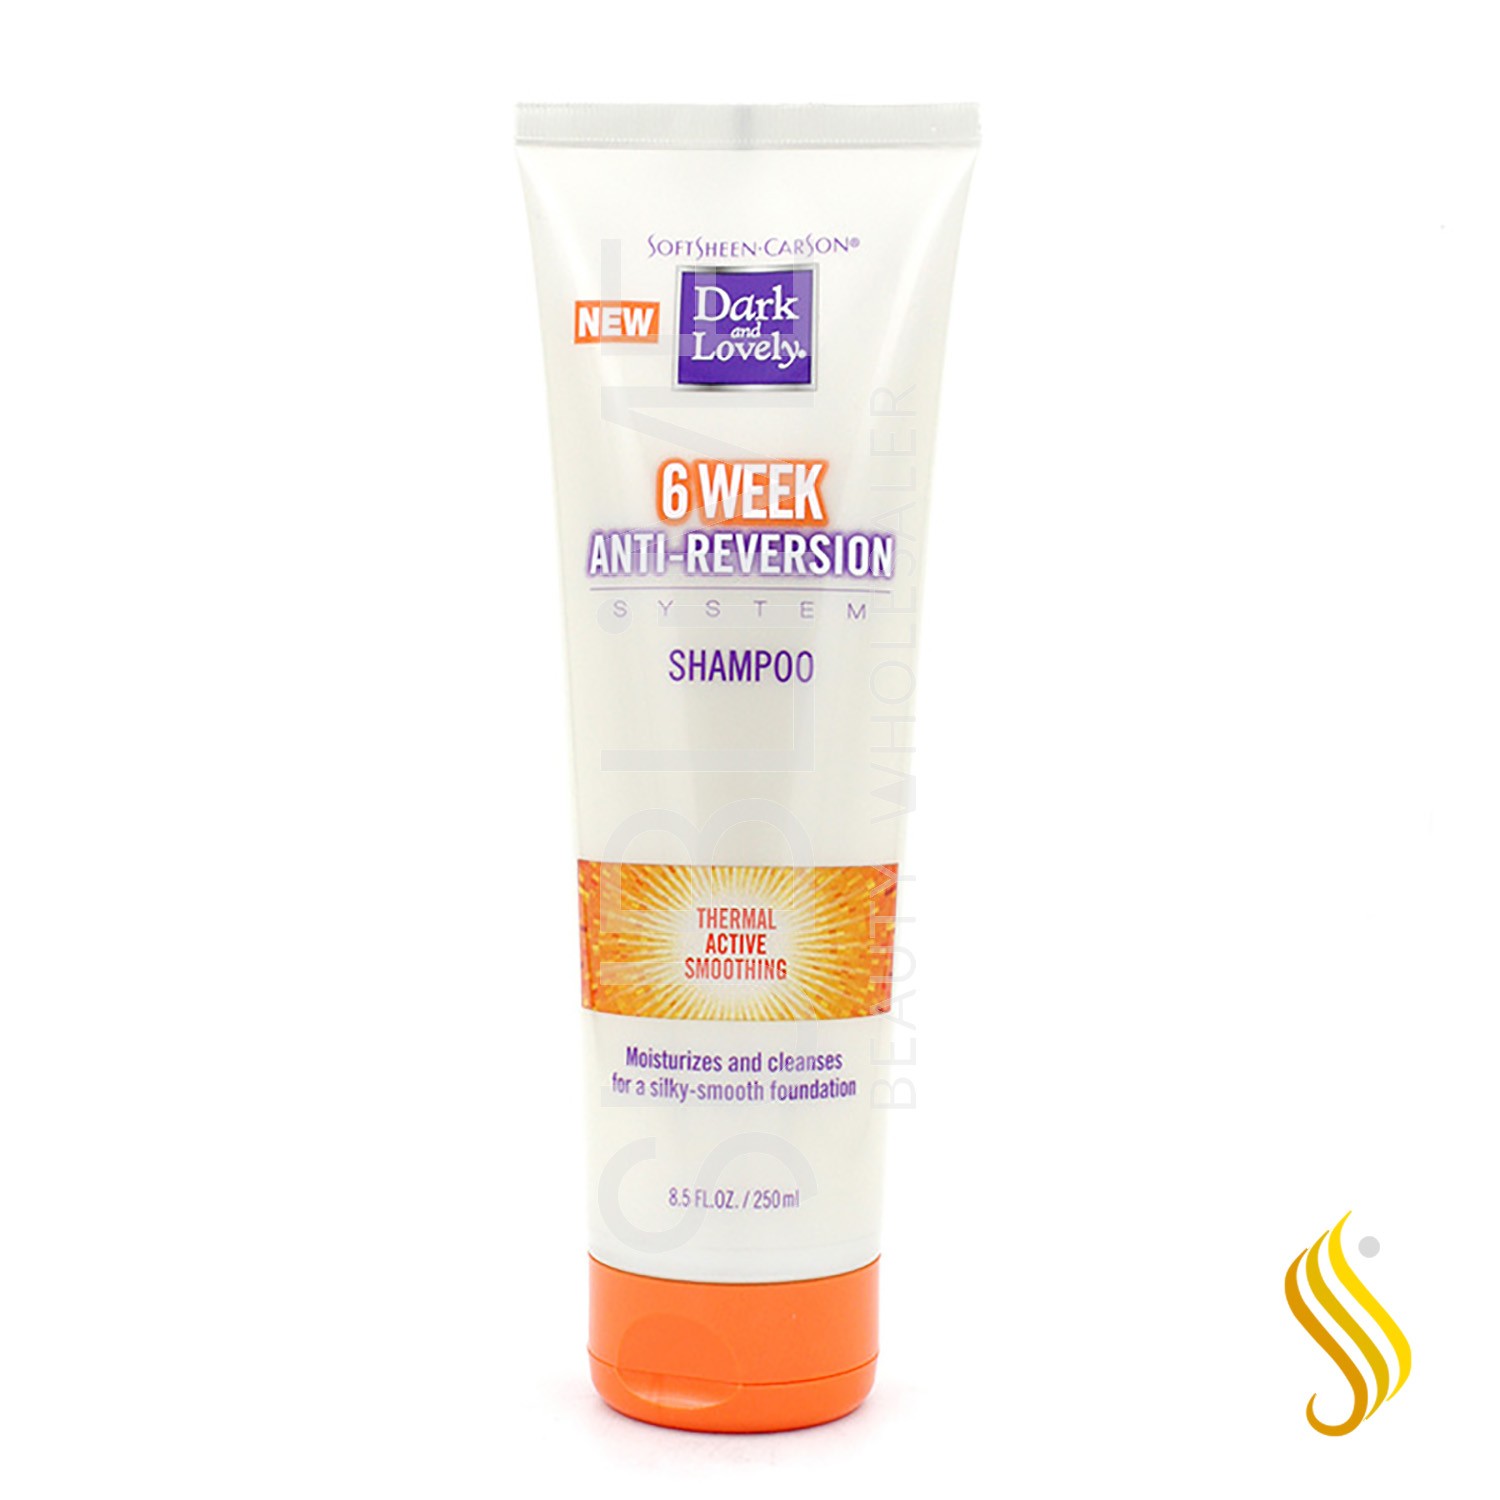 Soft & Sheen Carson Dark & Lovely 6 Week Anti Reversion Shampoo 250 Ml